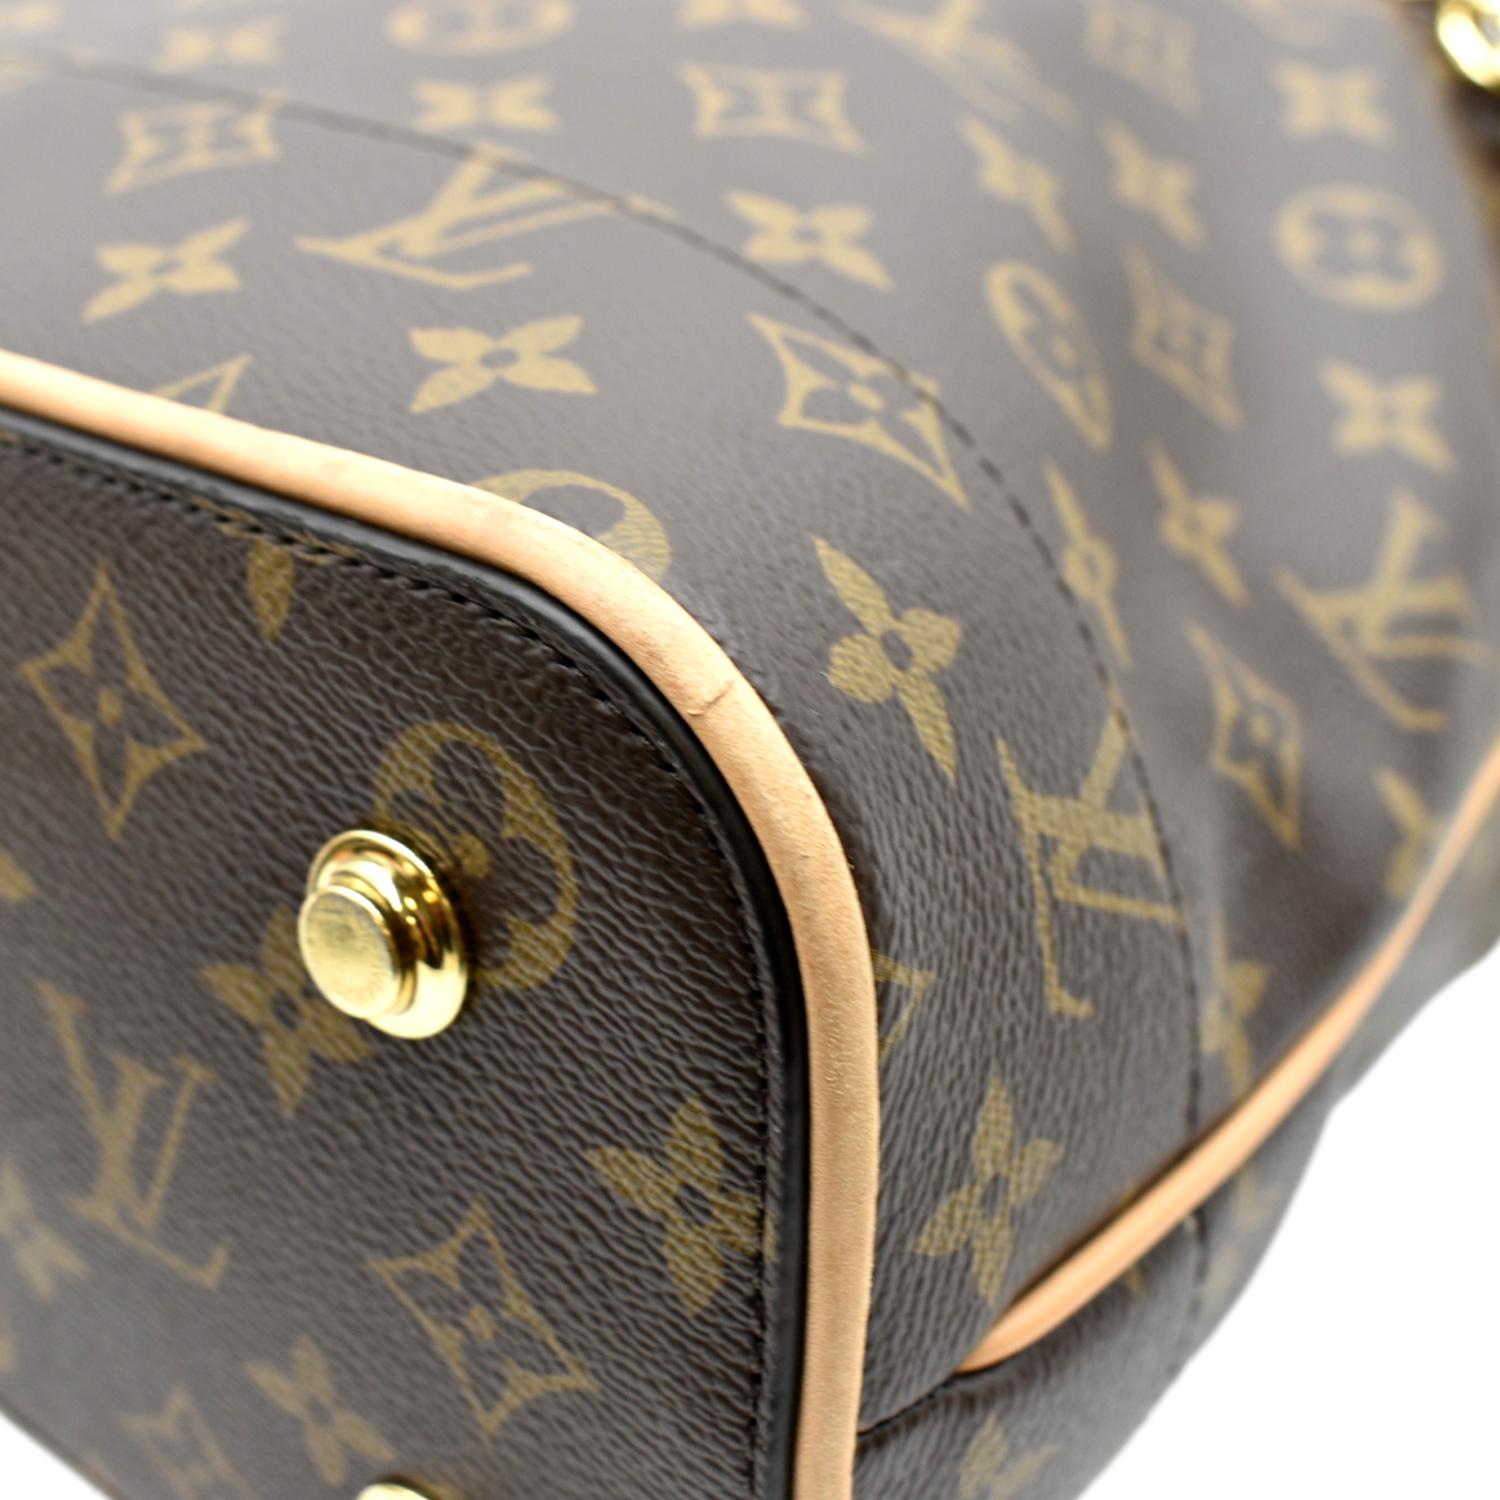 CarryAll MM Bag - Luxury Monogram Canvas Brown